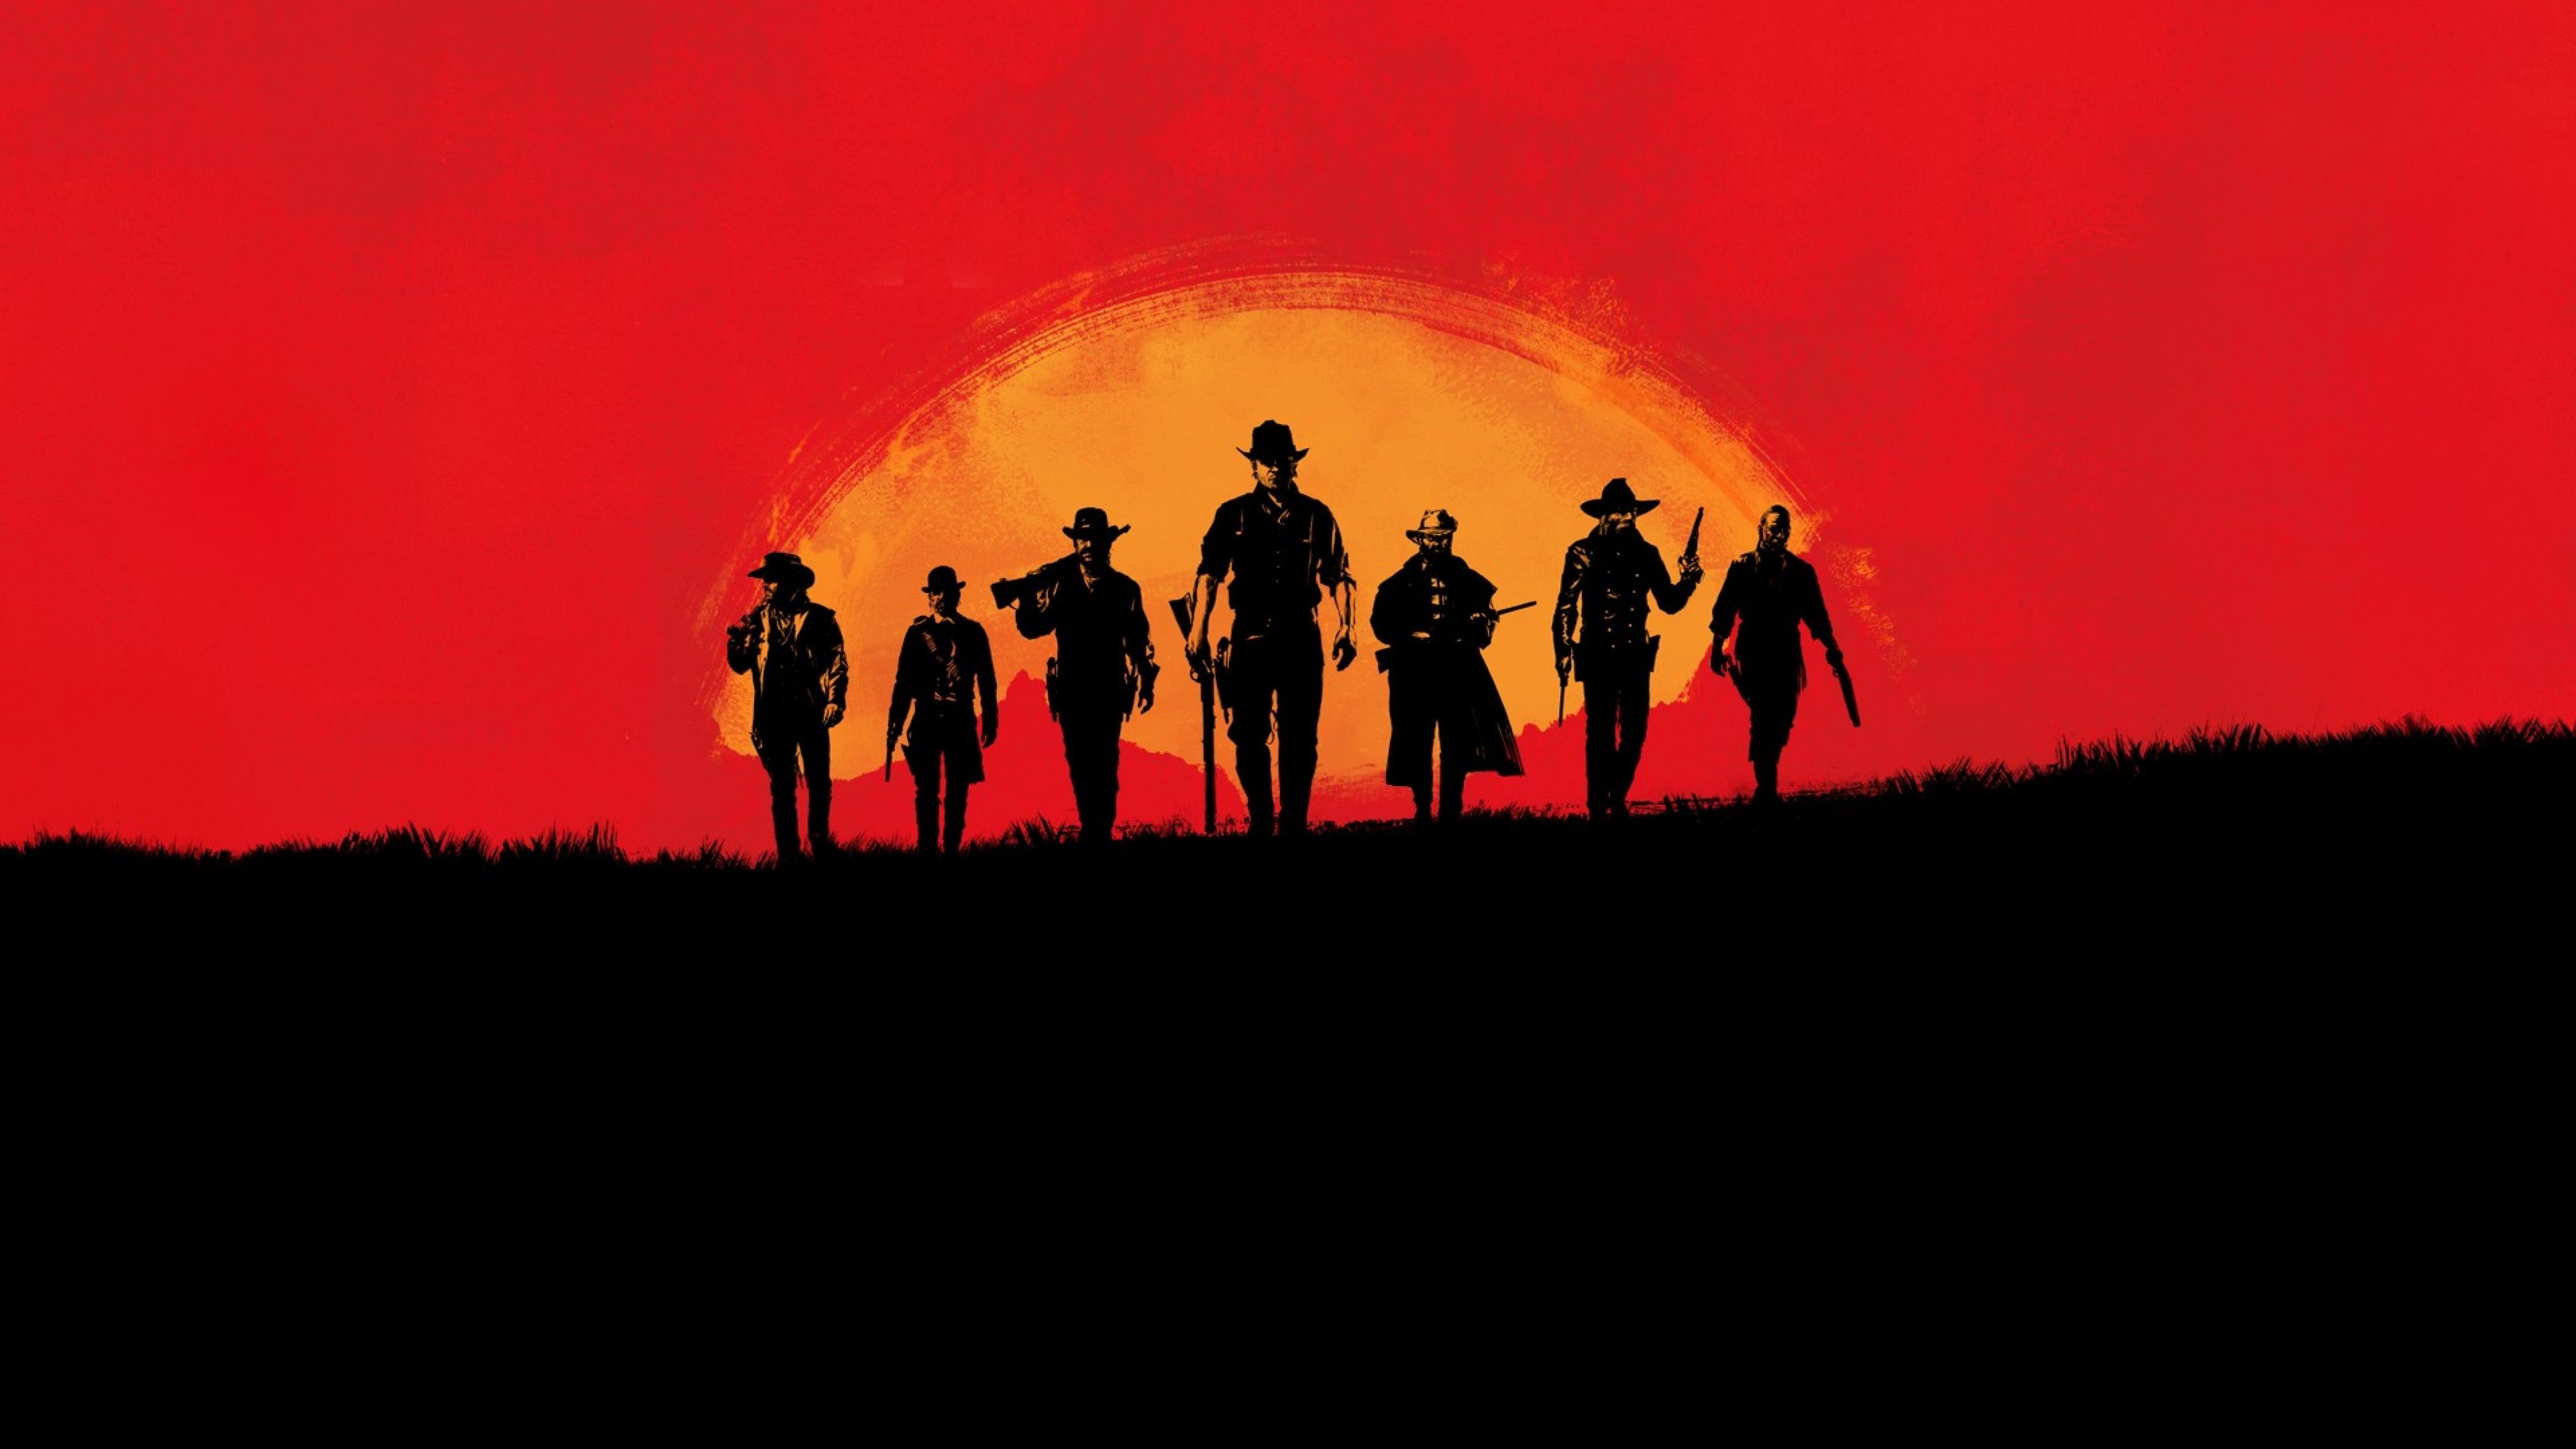 Red Dead Redemption 2 4k Wallpaper 1080p. Widescreen wallpaper, Red dead redemption, Red sunset